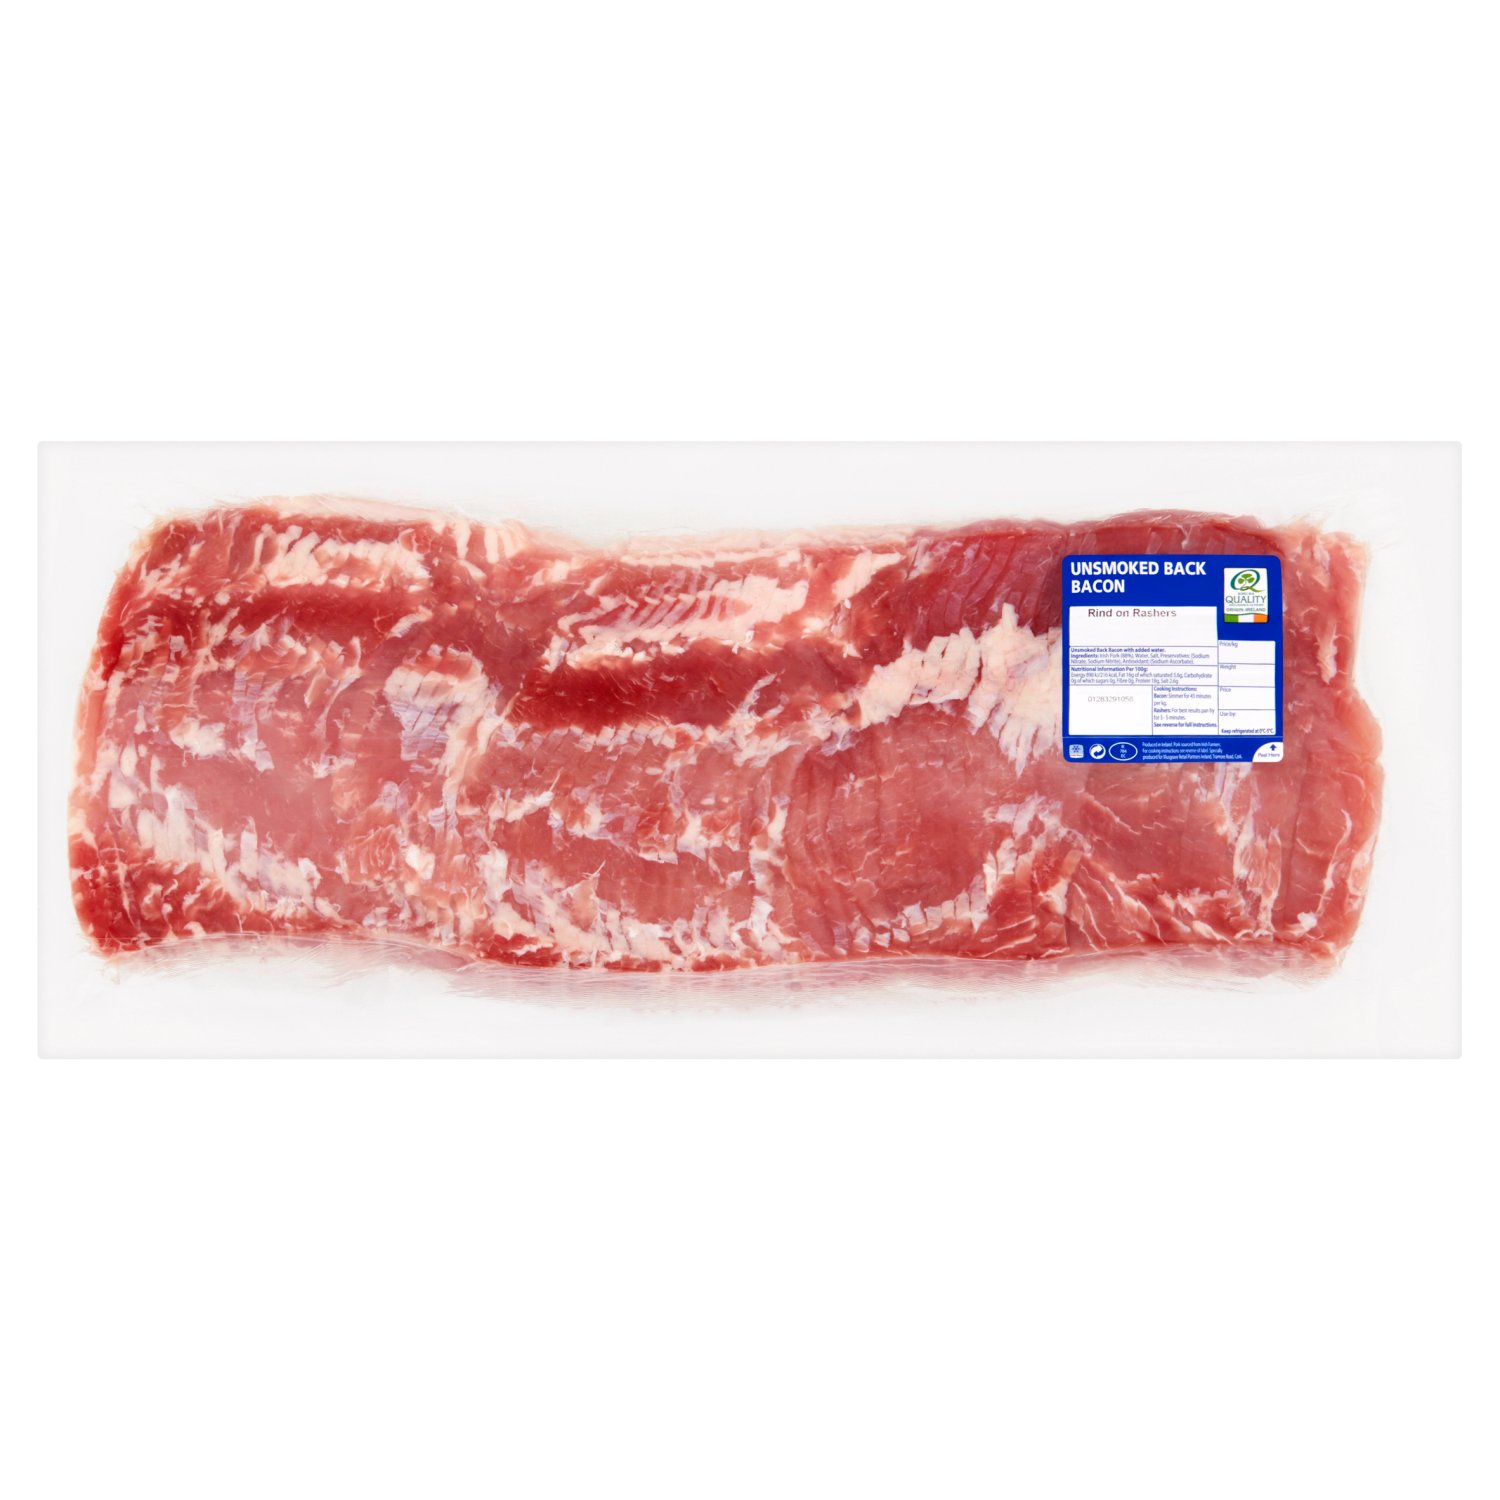 Unsmoked Back Bacon Rind on Rashers (1 kg)